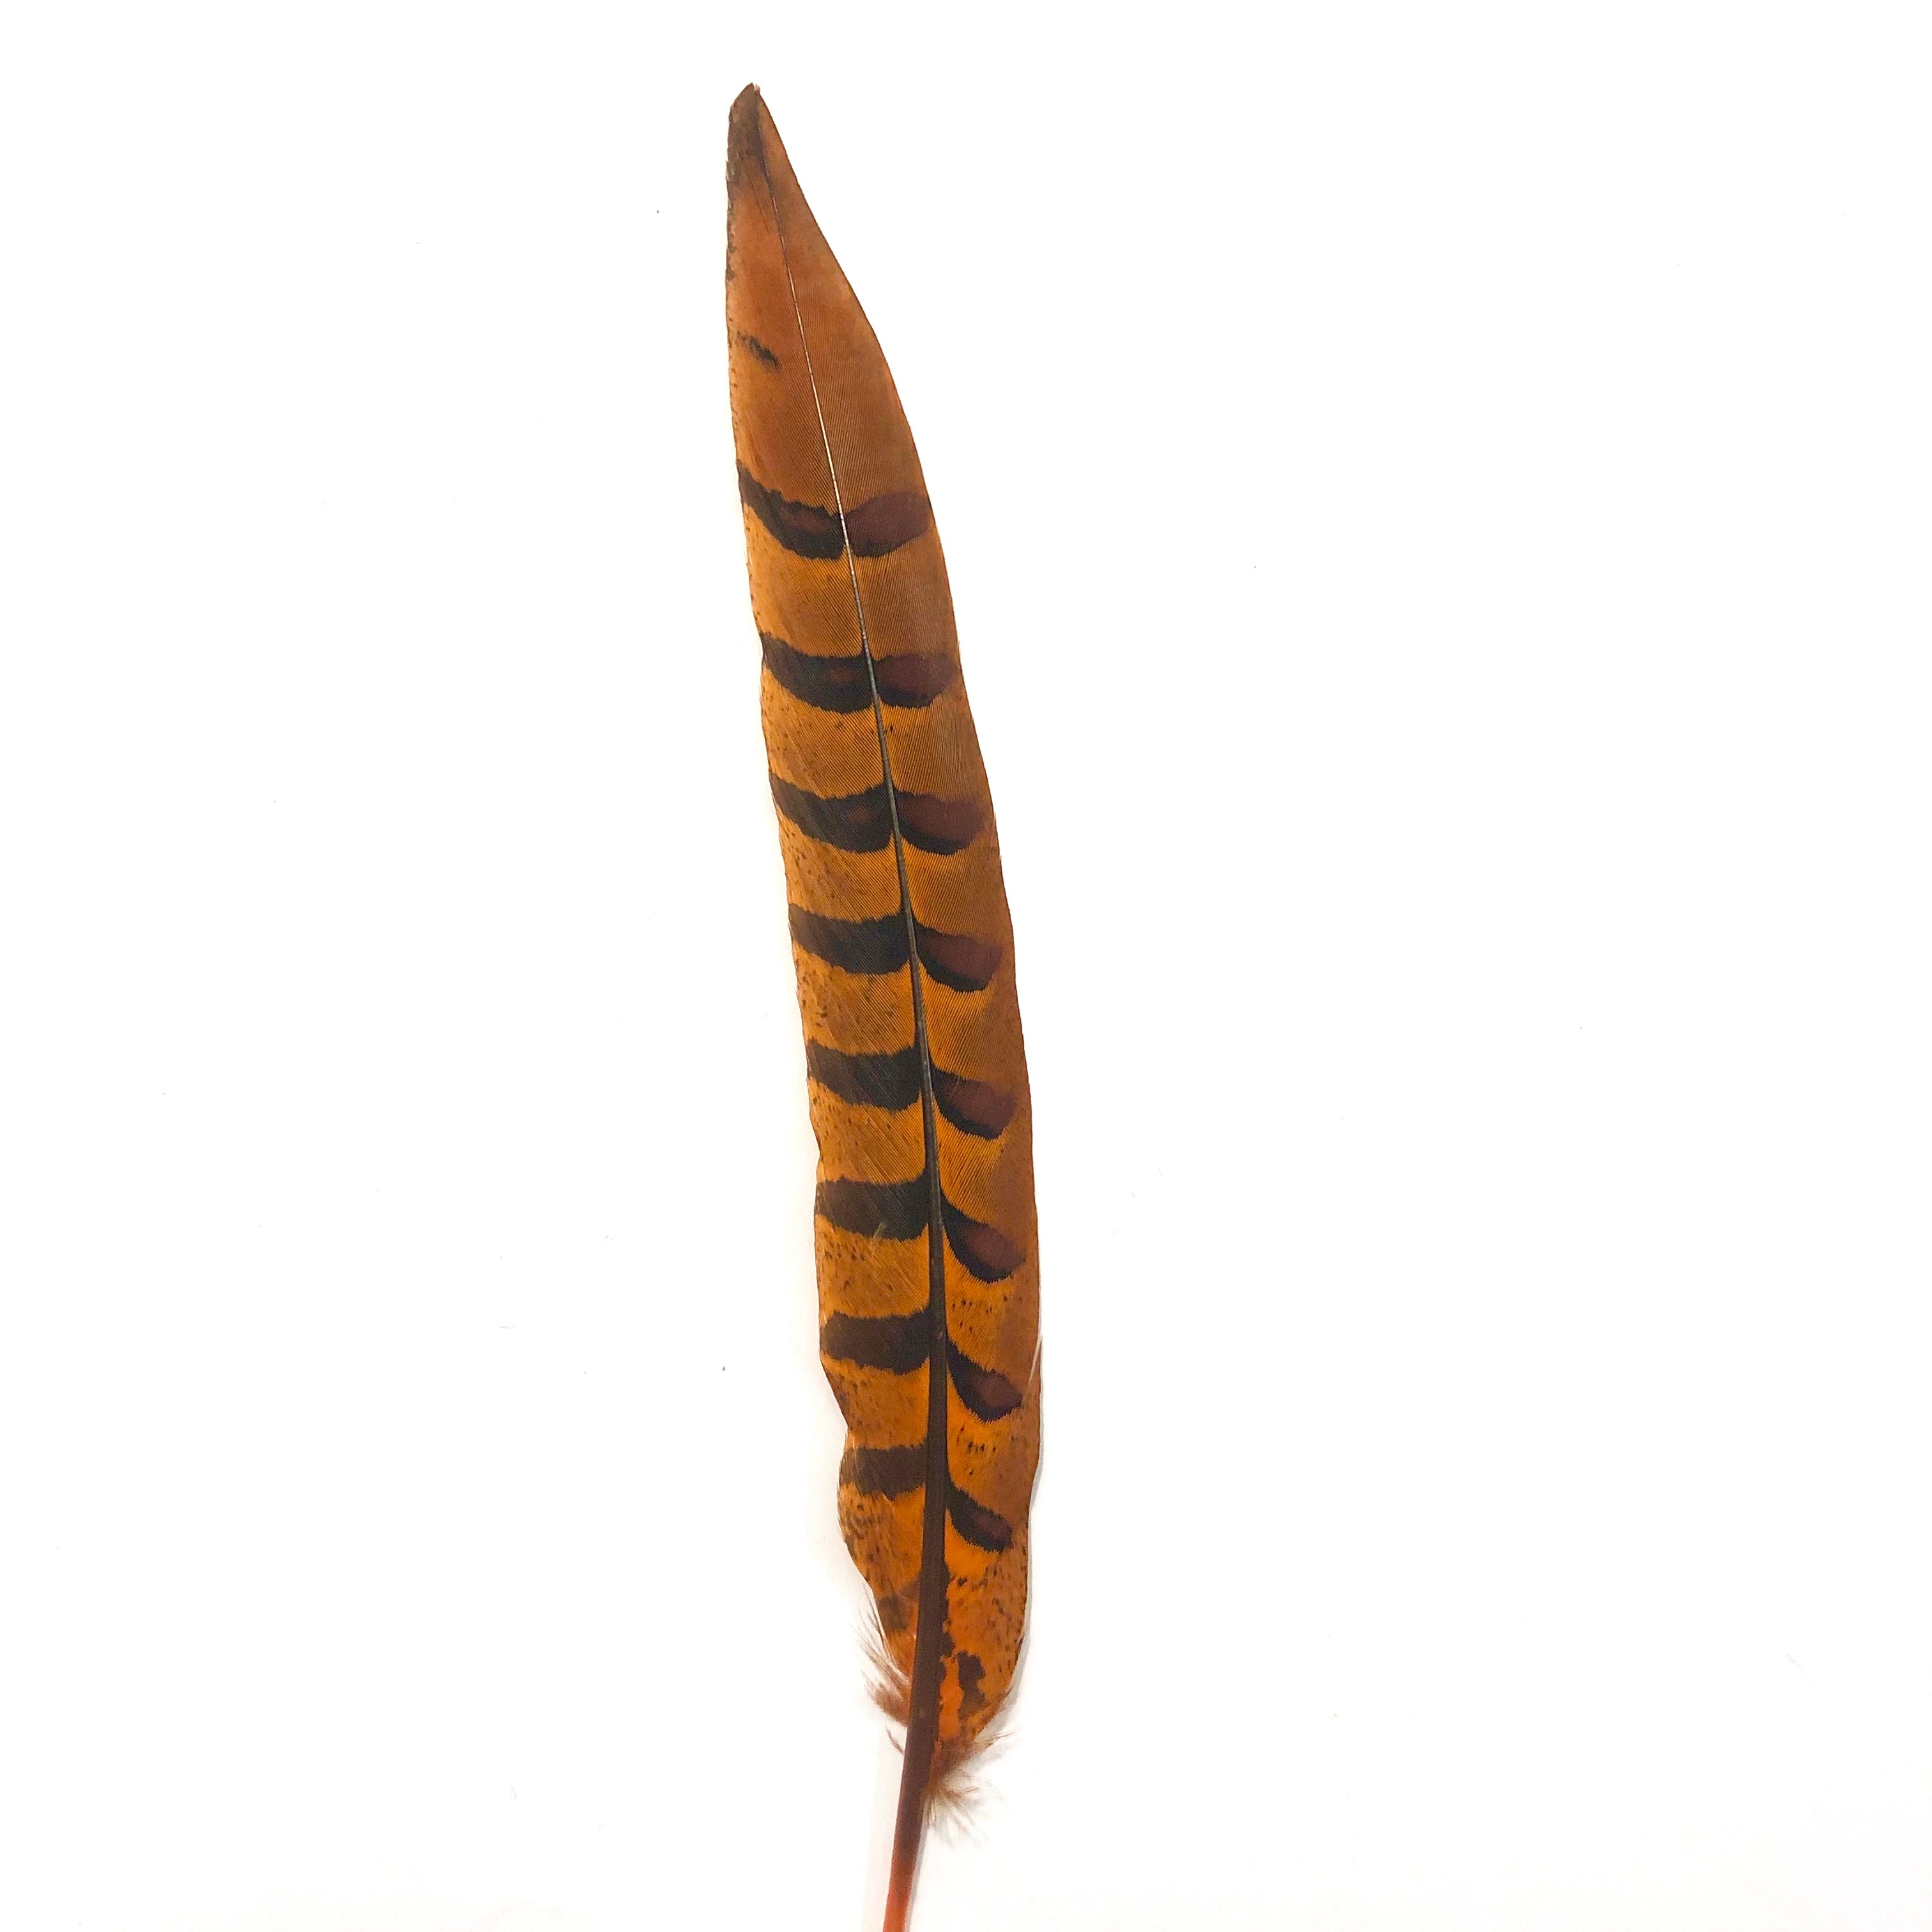 12" to 14" Reeves Pheasant Tail Feather - Orange